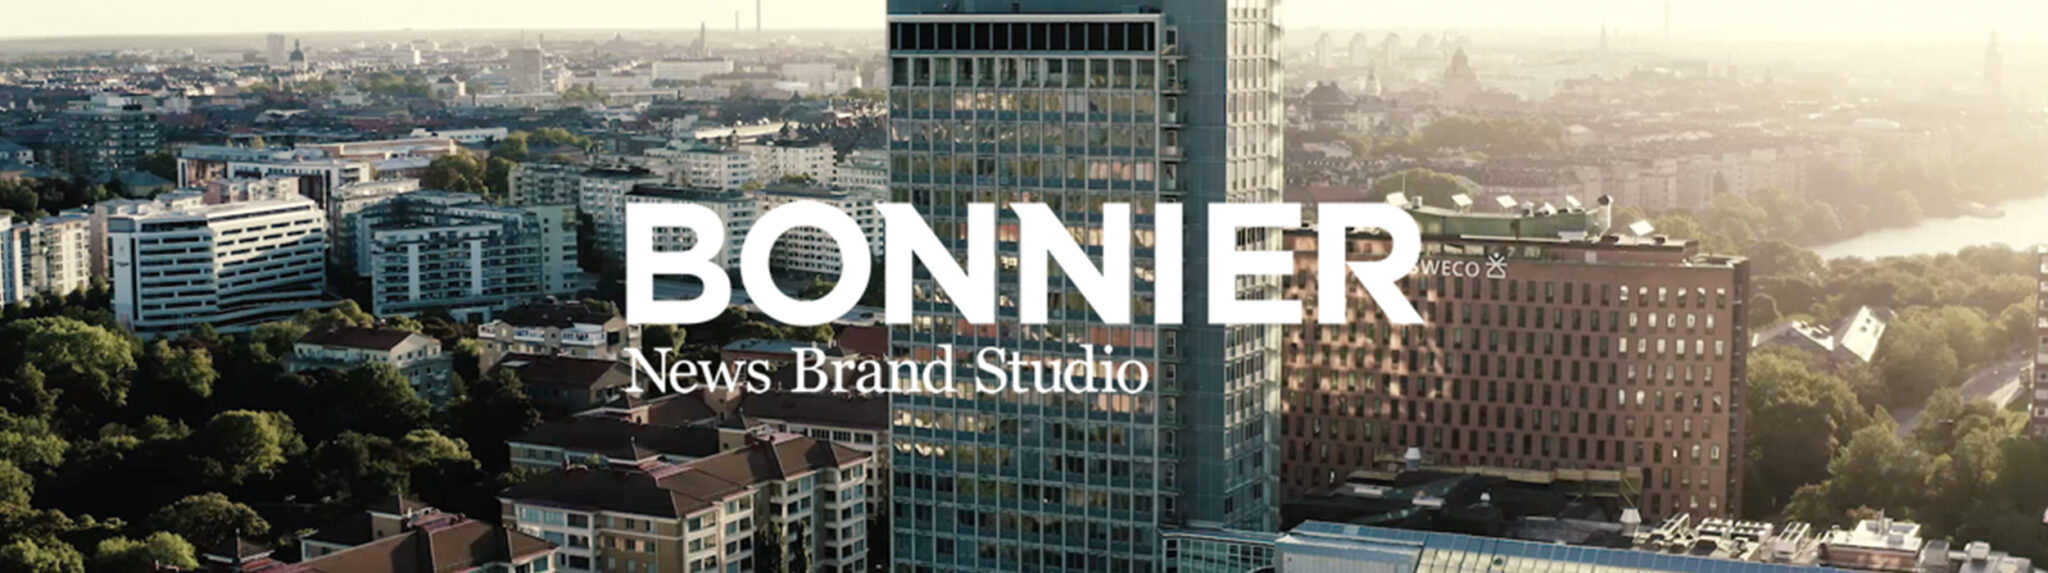 How Bonnier News Brand Studio Helps Customers Reach Audiences Online